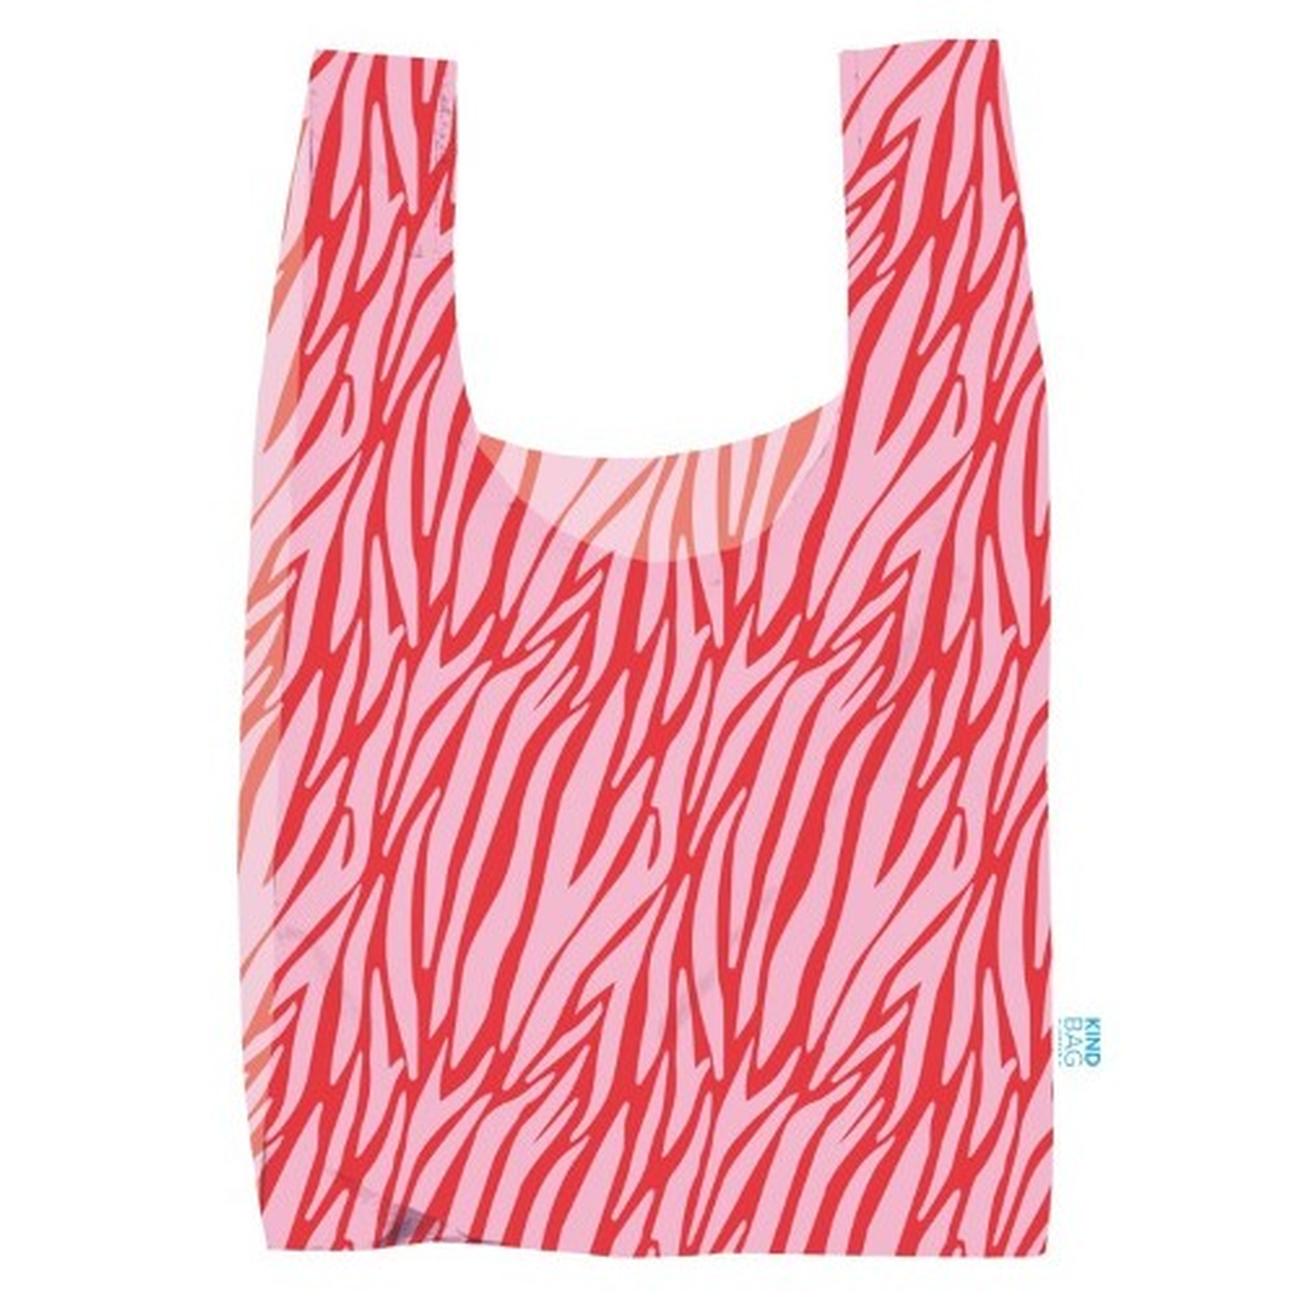 Kind Bag Medium Zebra Red